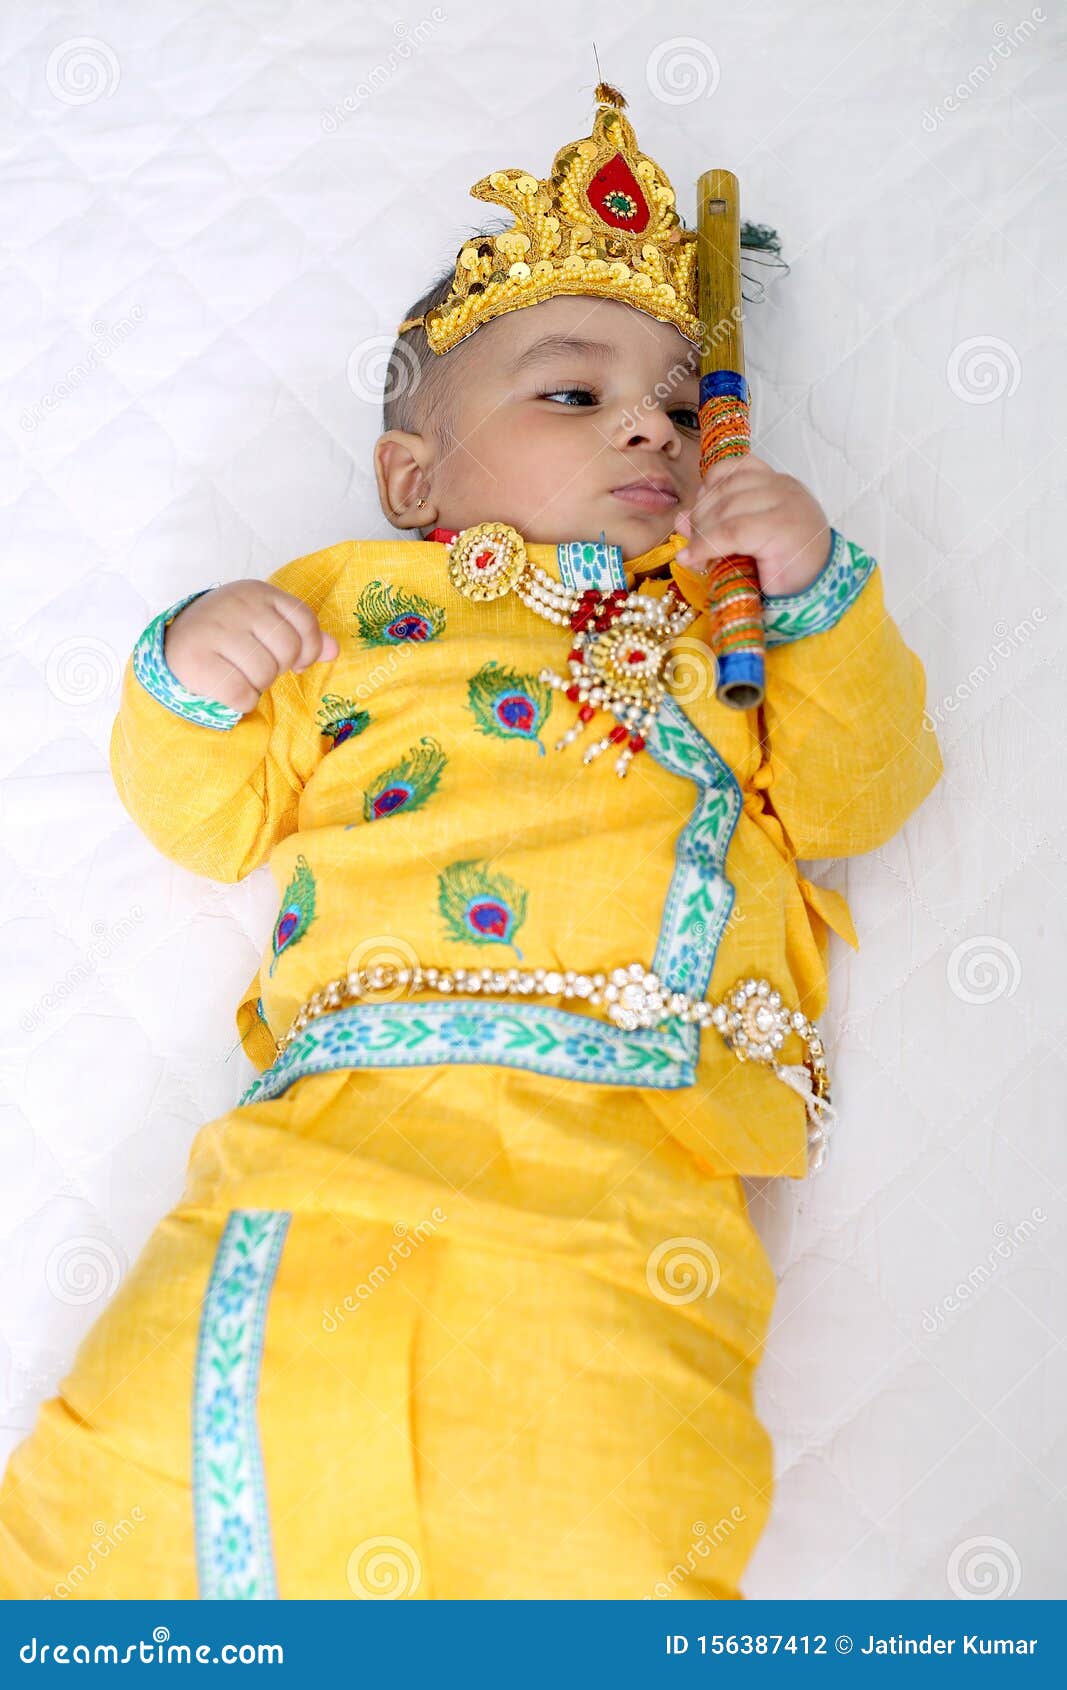 Picture of Baby krishna. stock photo. Image of dahi - 156387412